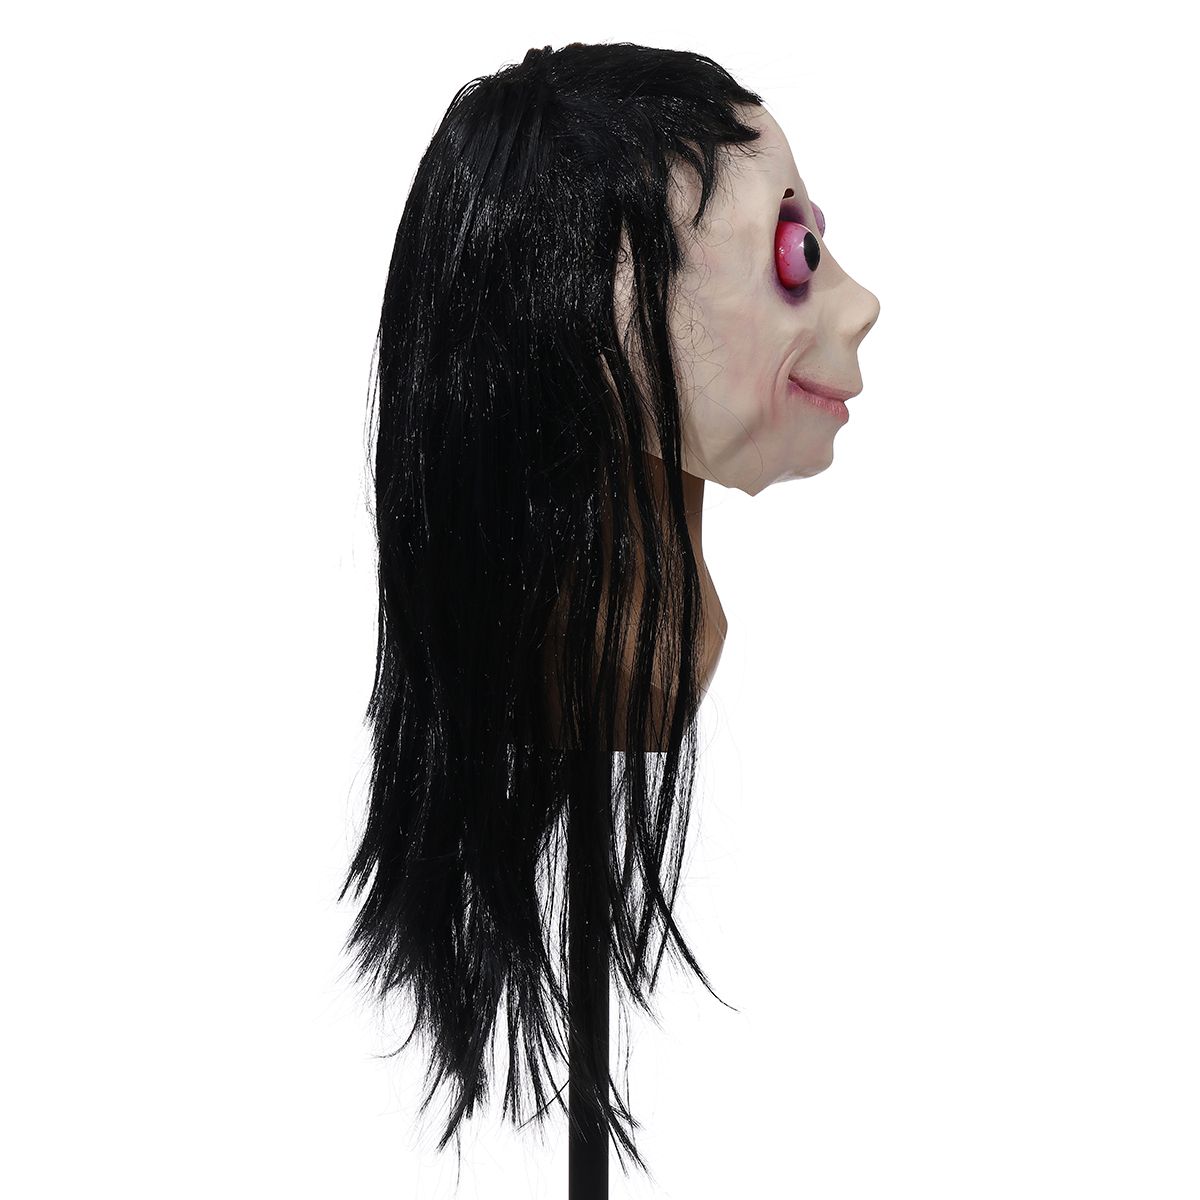 LED-Scary-Momo-Mask-Game-Horror-Mask-Cosplay-Full-Head-Momo-Mask-Big-Eye-With-Long-Wigs-Halloween-Pa-1556450